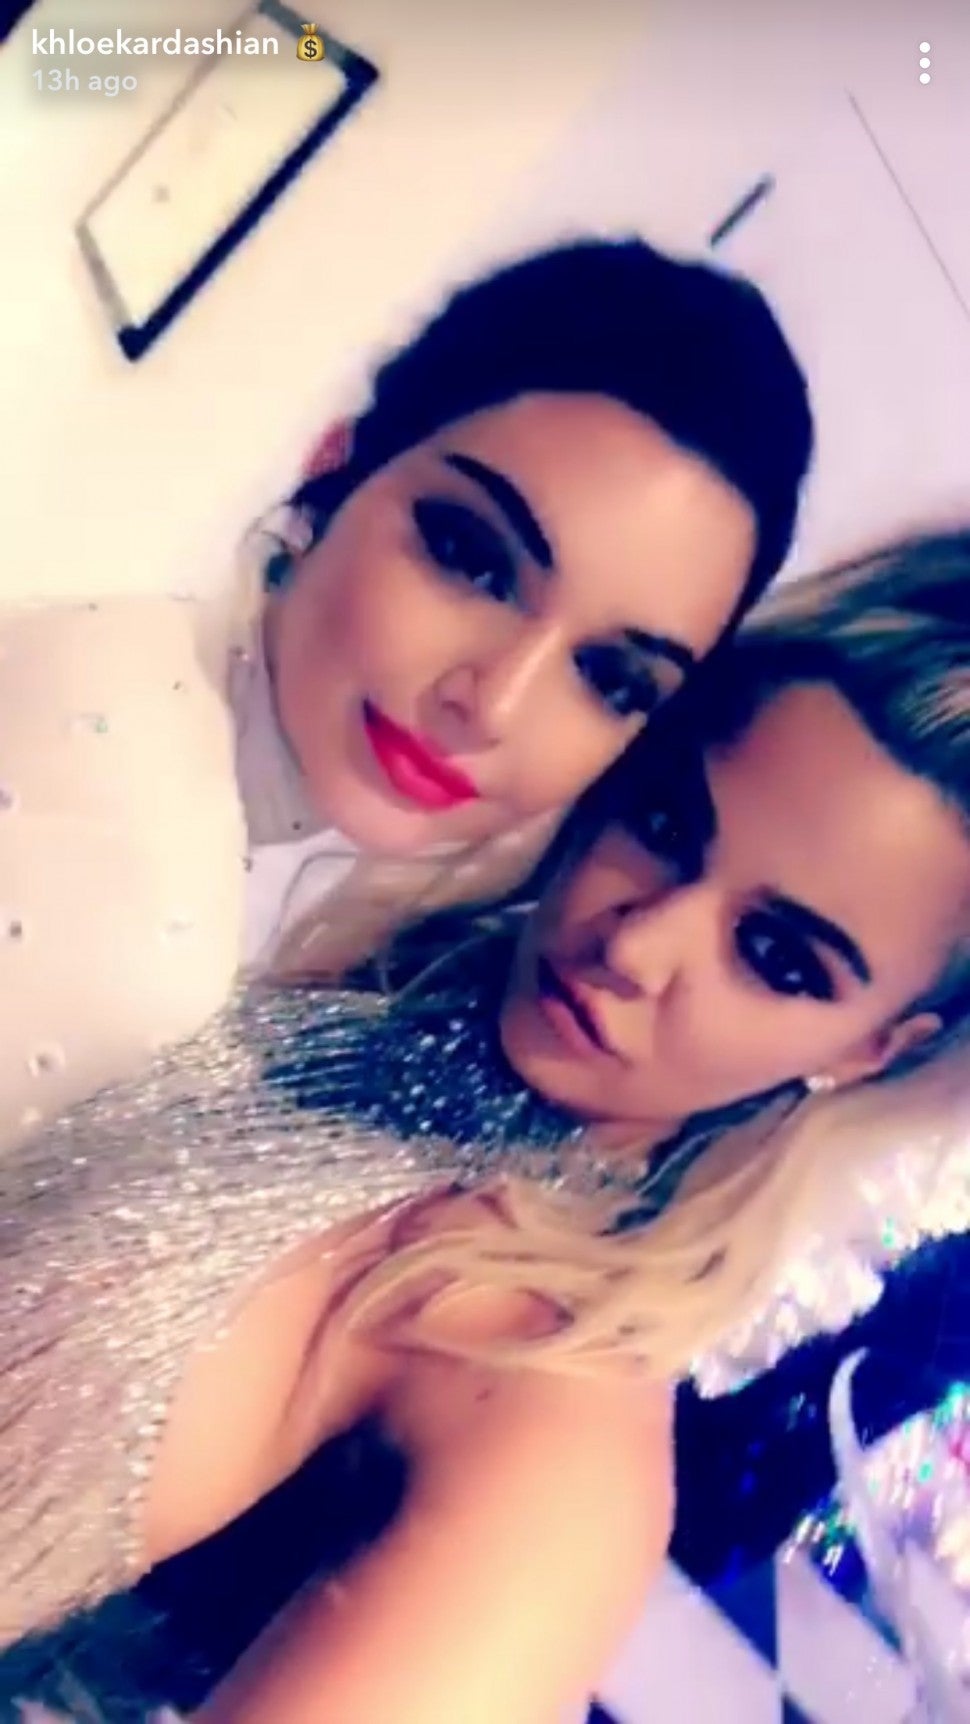 Kendall Jenner and Khloe Kardashian at xmas eve party